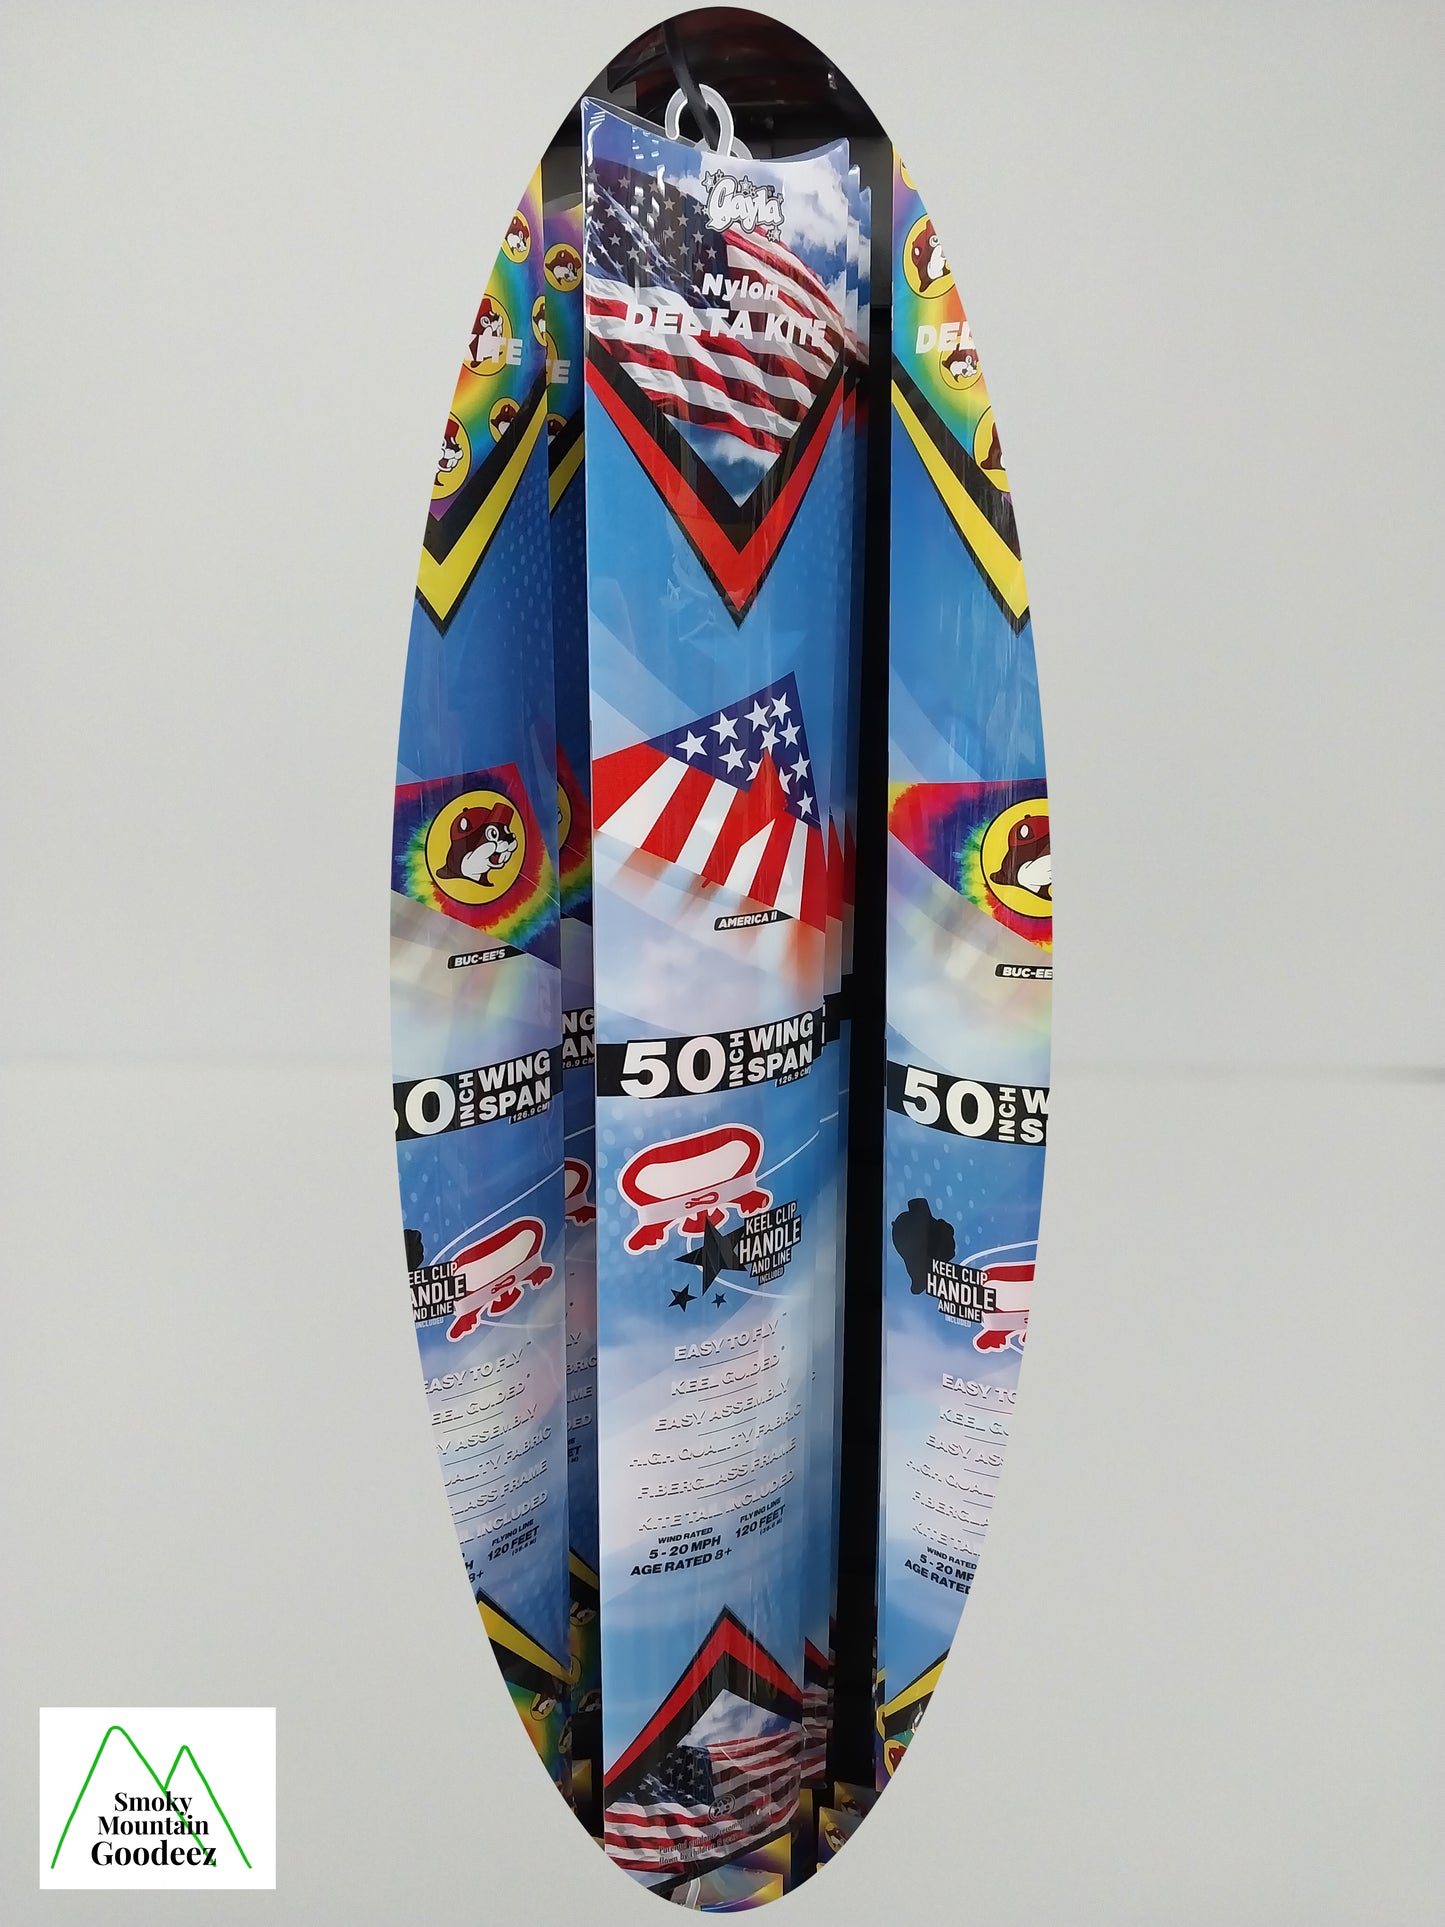 Buc-ee's Delta Nylon Kite - In 3 Different Styles